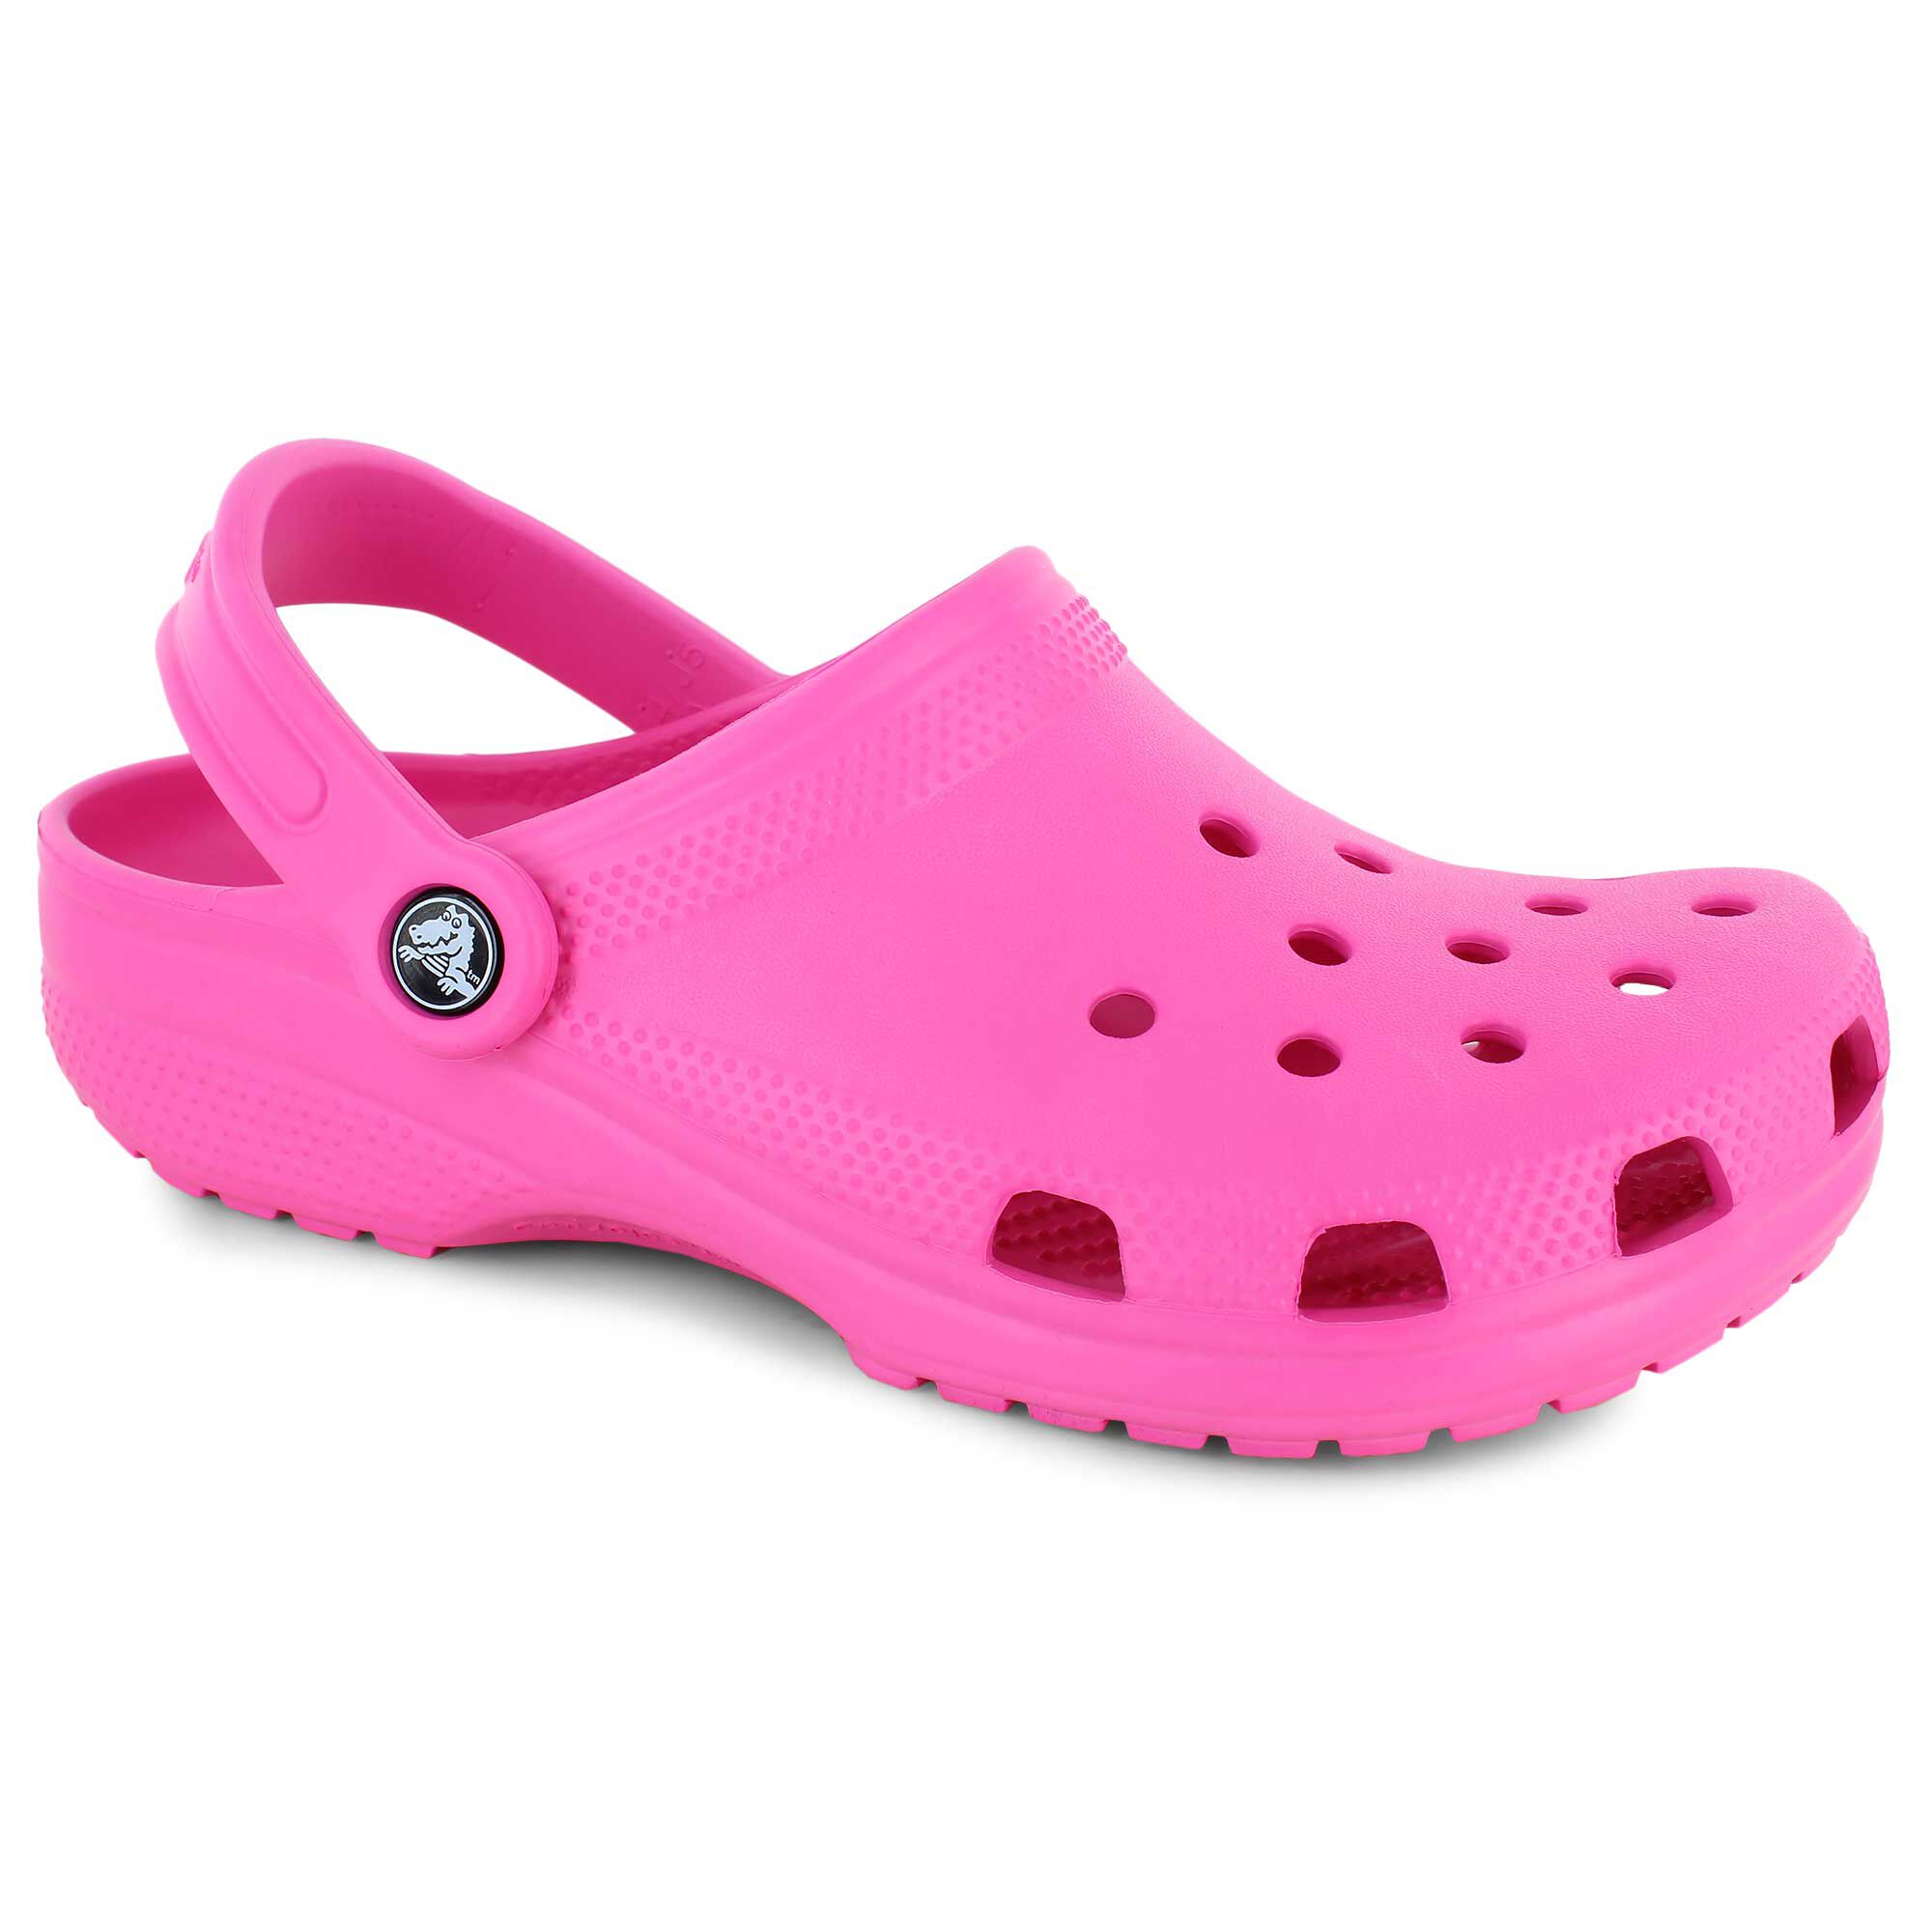 shoe dept crocs